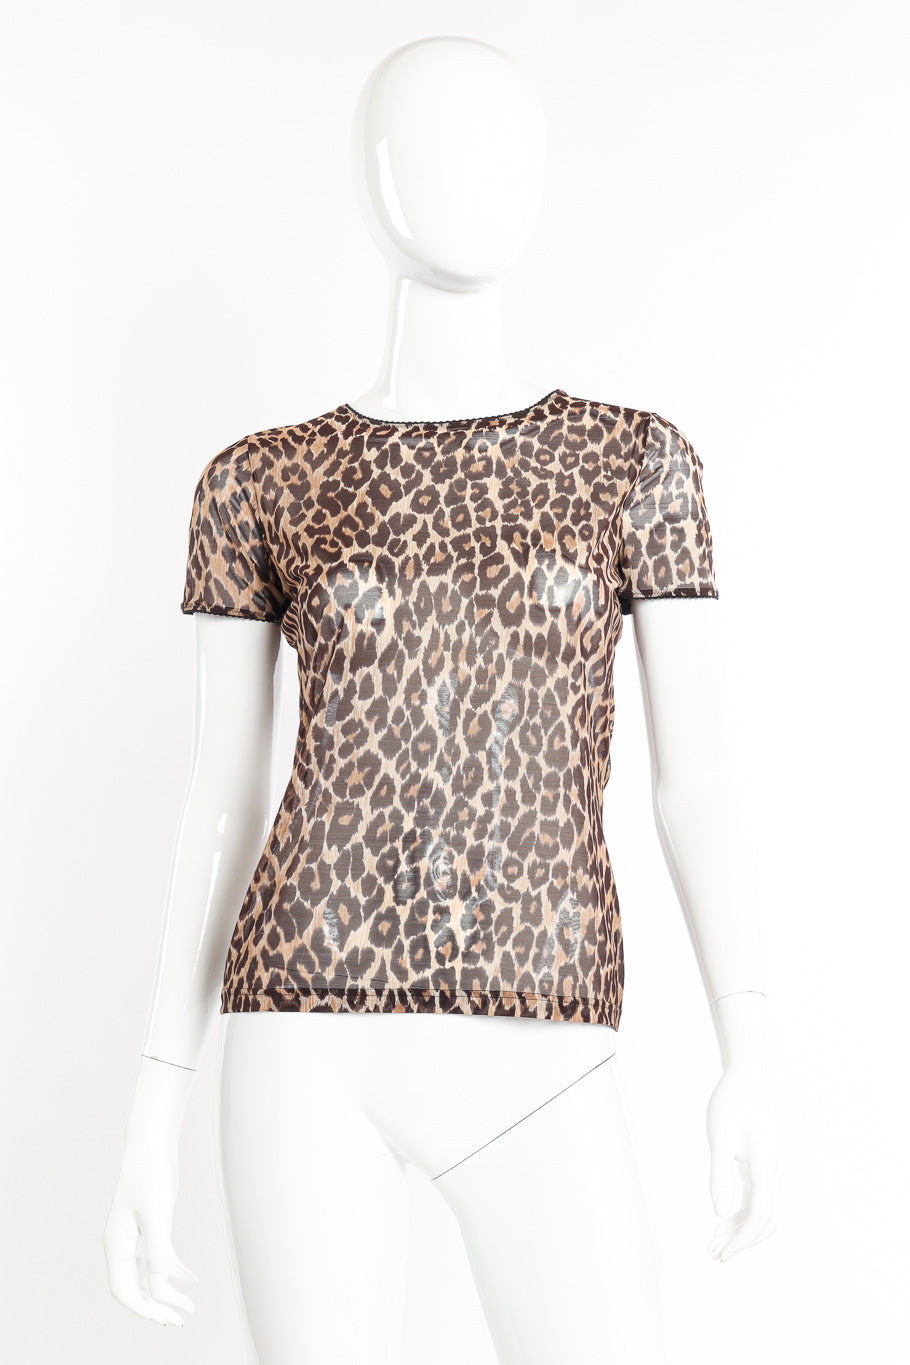 Leopard Mesh Top by Dolce & Gabbana on mannequin @recessla